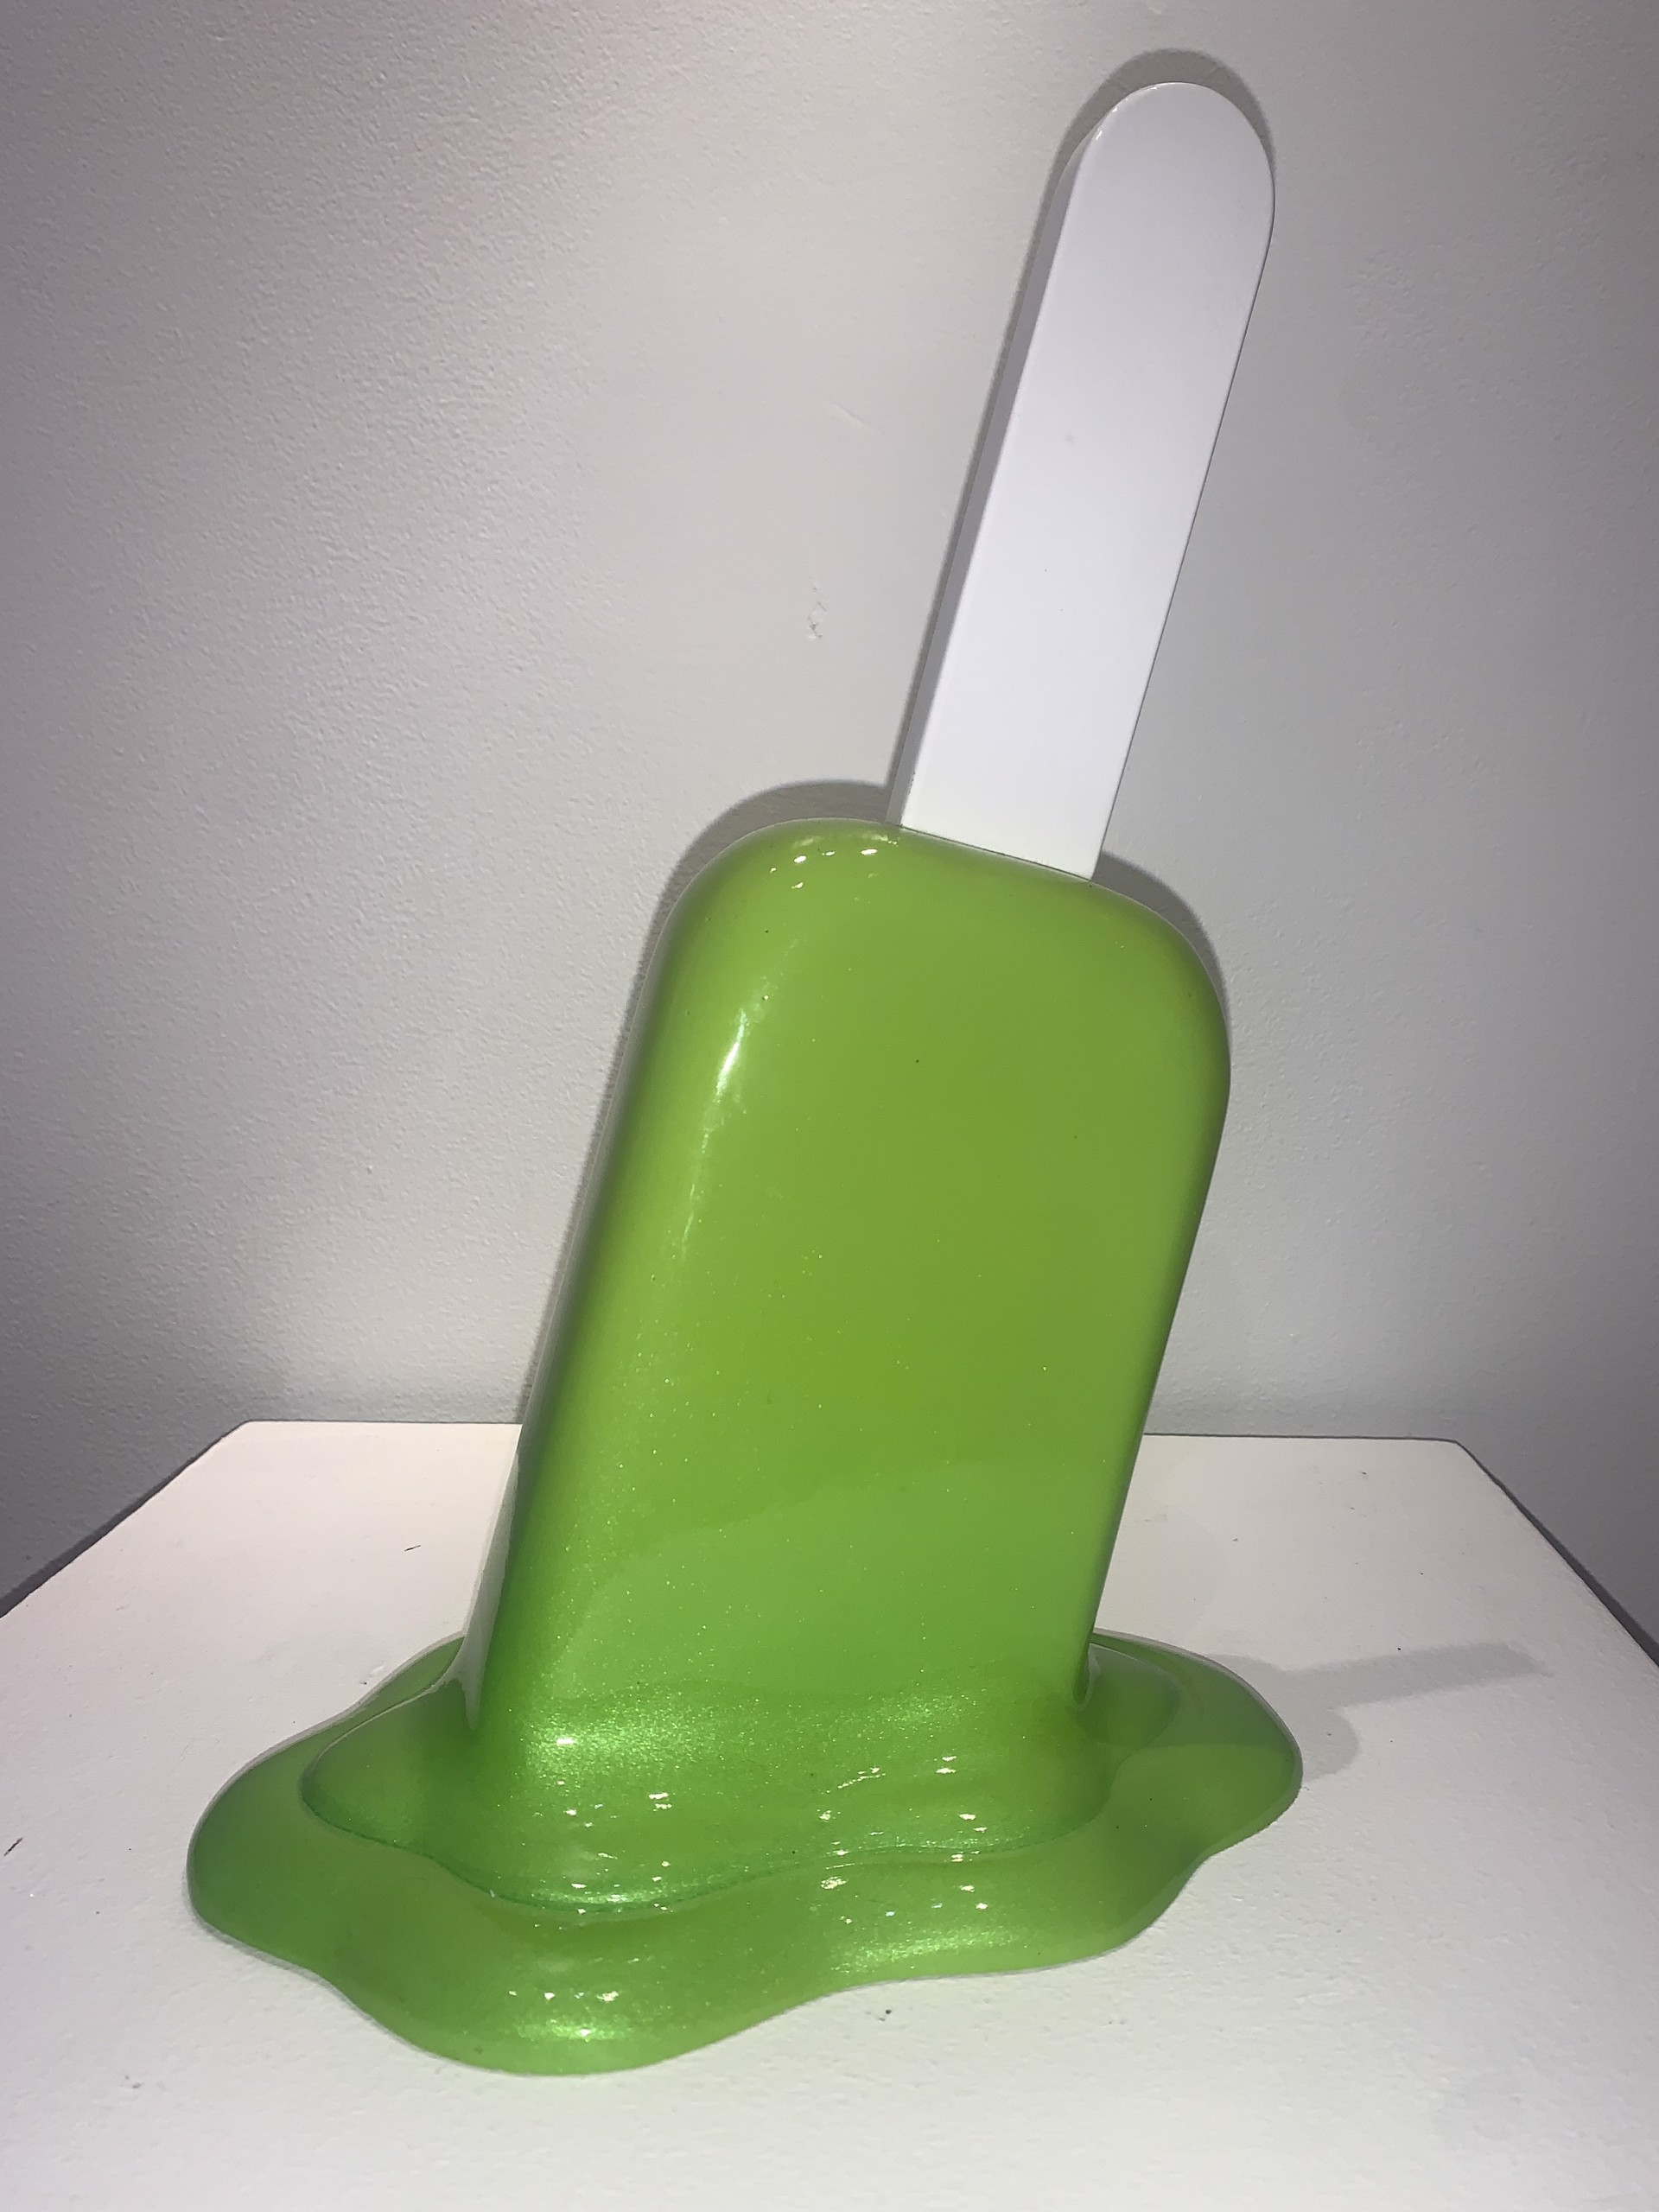 The Sweet Life Lime Green Popsicle by Elena Bulatova